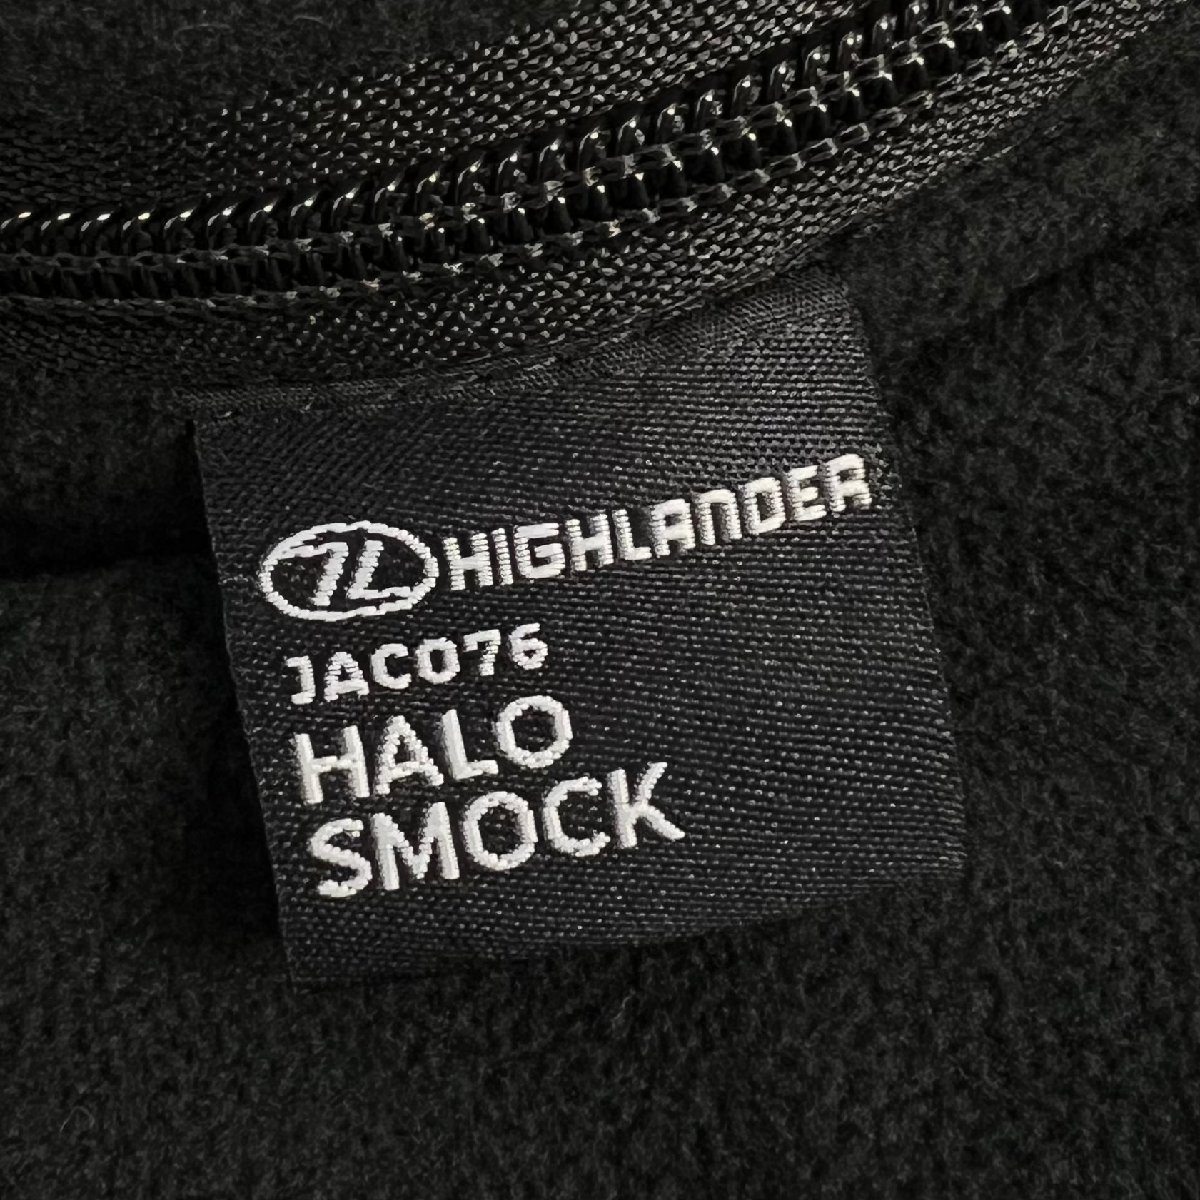 HIGHLANDER Highlander [HALO SMOCK] military England army PCS thermal smock nylon lining fleece stop water Zip L black / black 